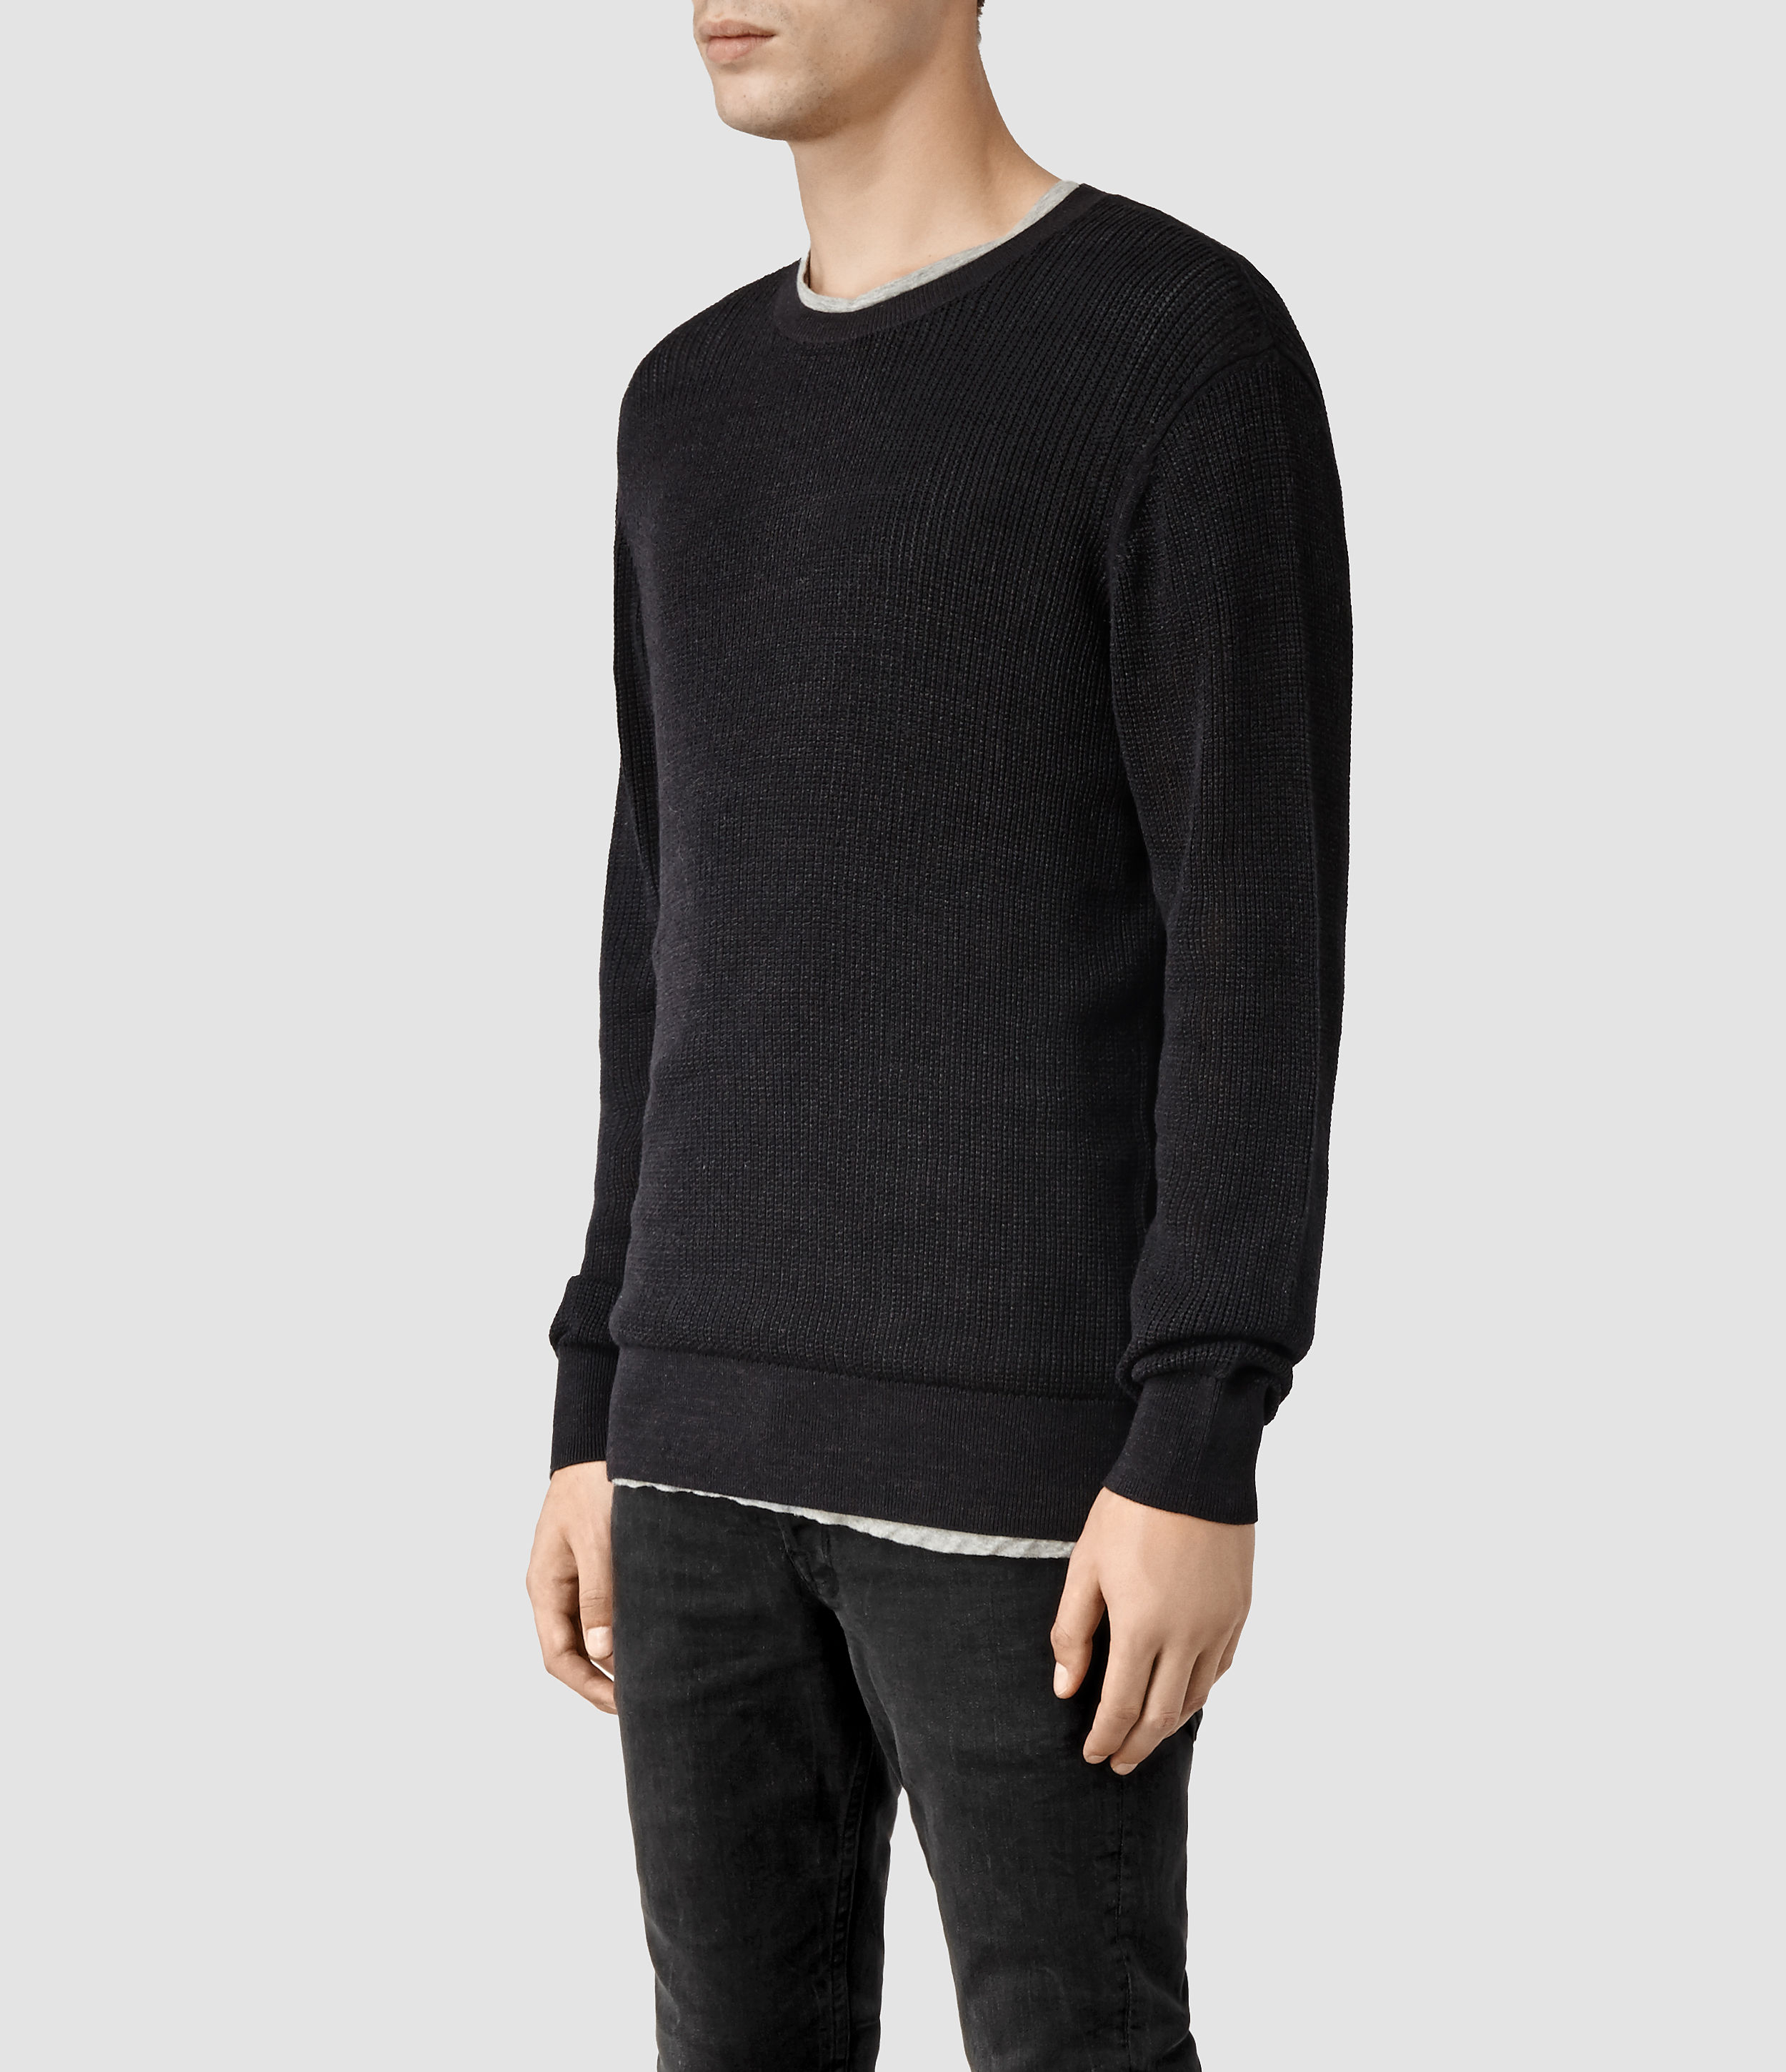 AllSaints Stafford Crew Sweater in Dark Charcoal (Gray) for Men - Lyst